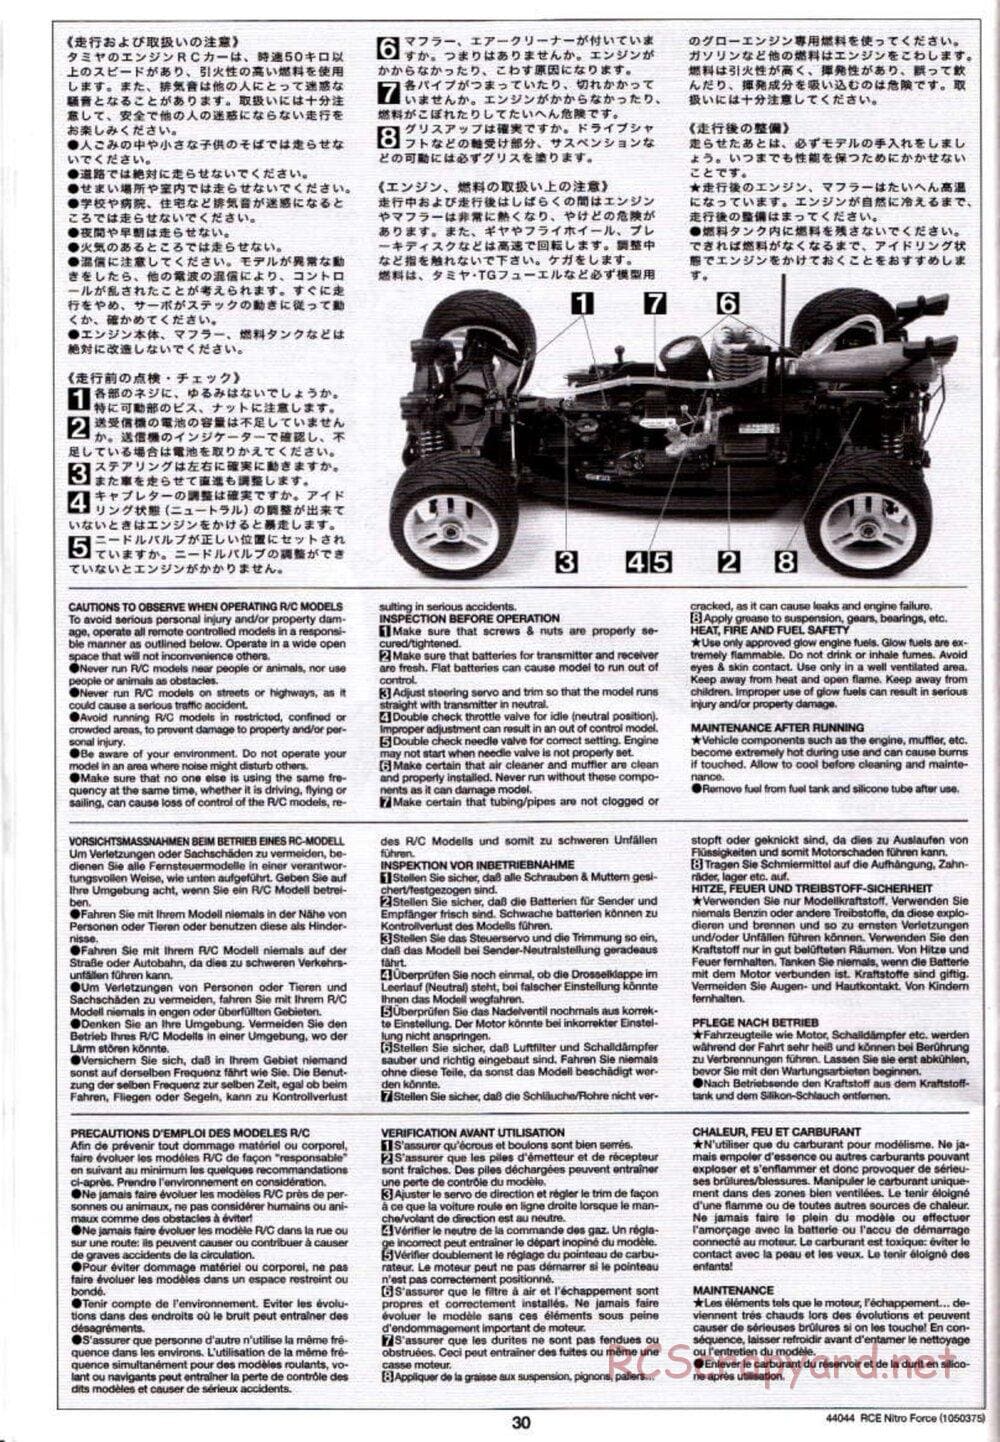 Tamiya - Nitro Force - NDF-01 Chassis - Manual - Page 30